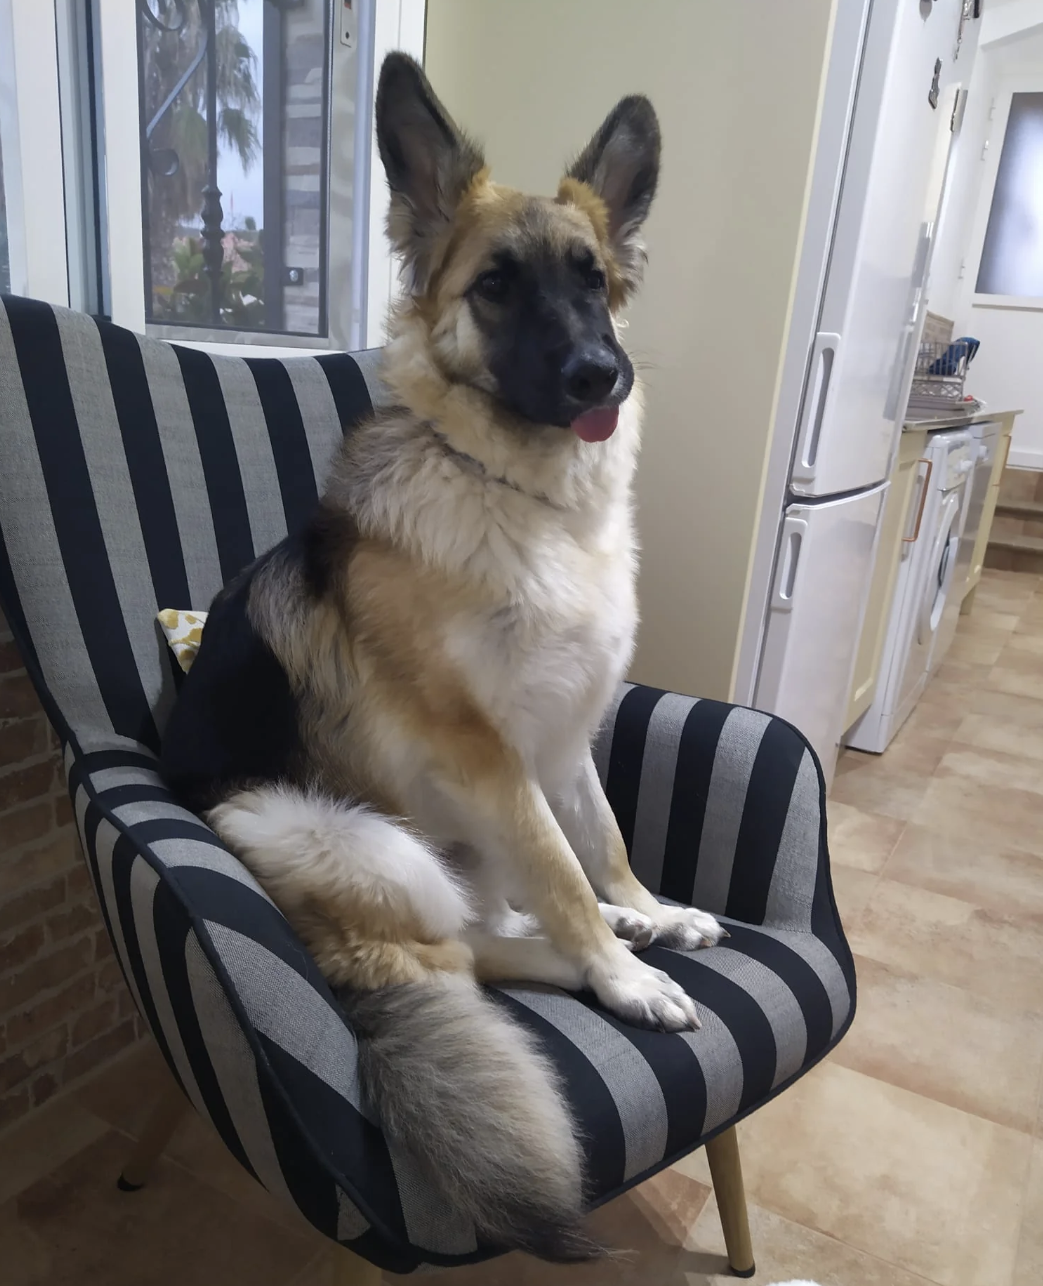 German Shepherd sitting upright on a striped armchair indoors, looking alert